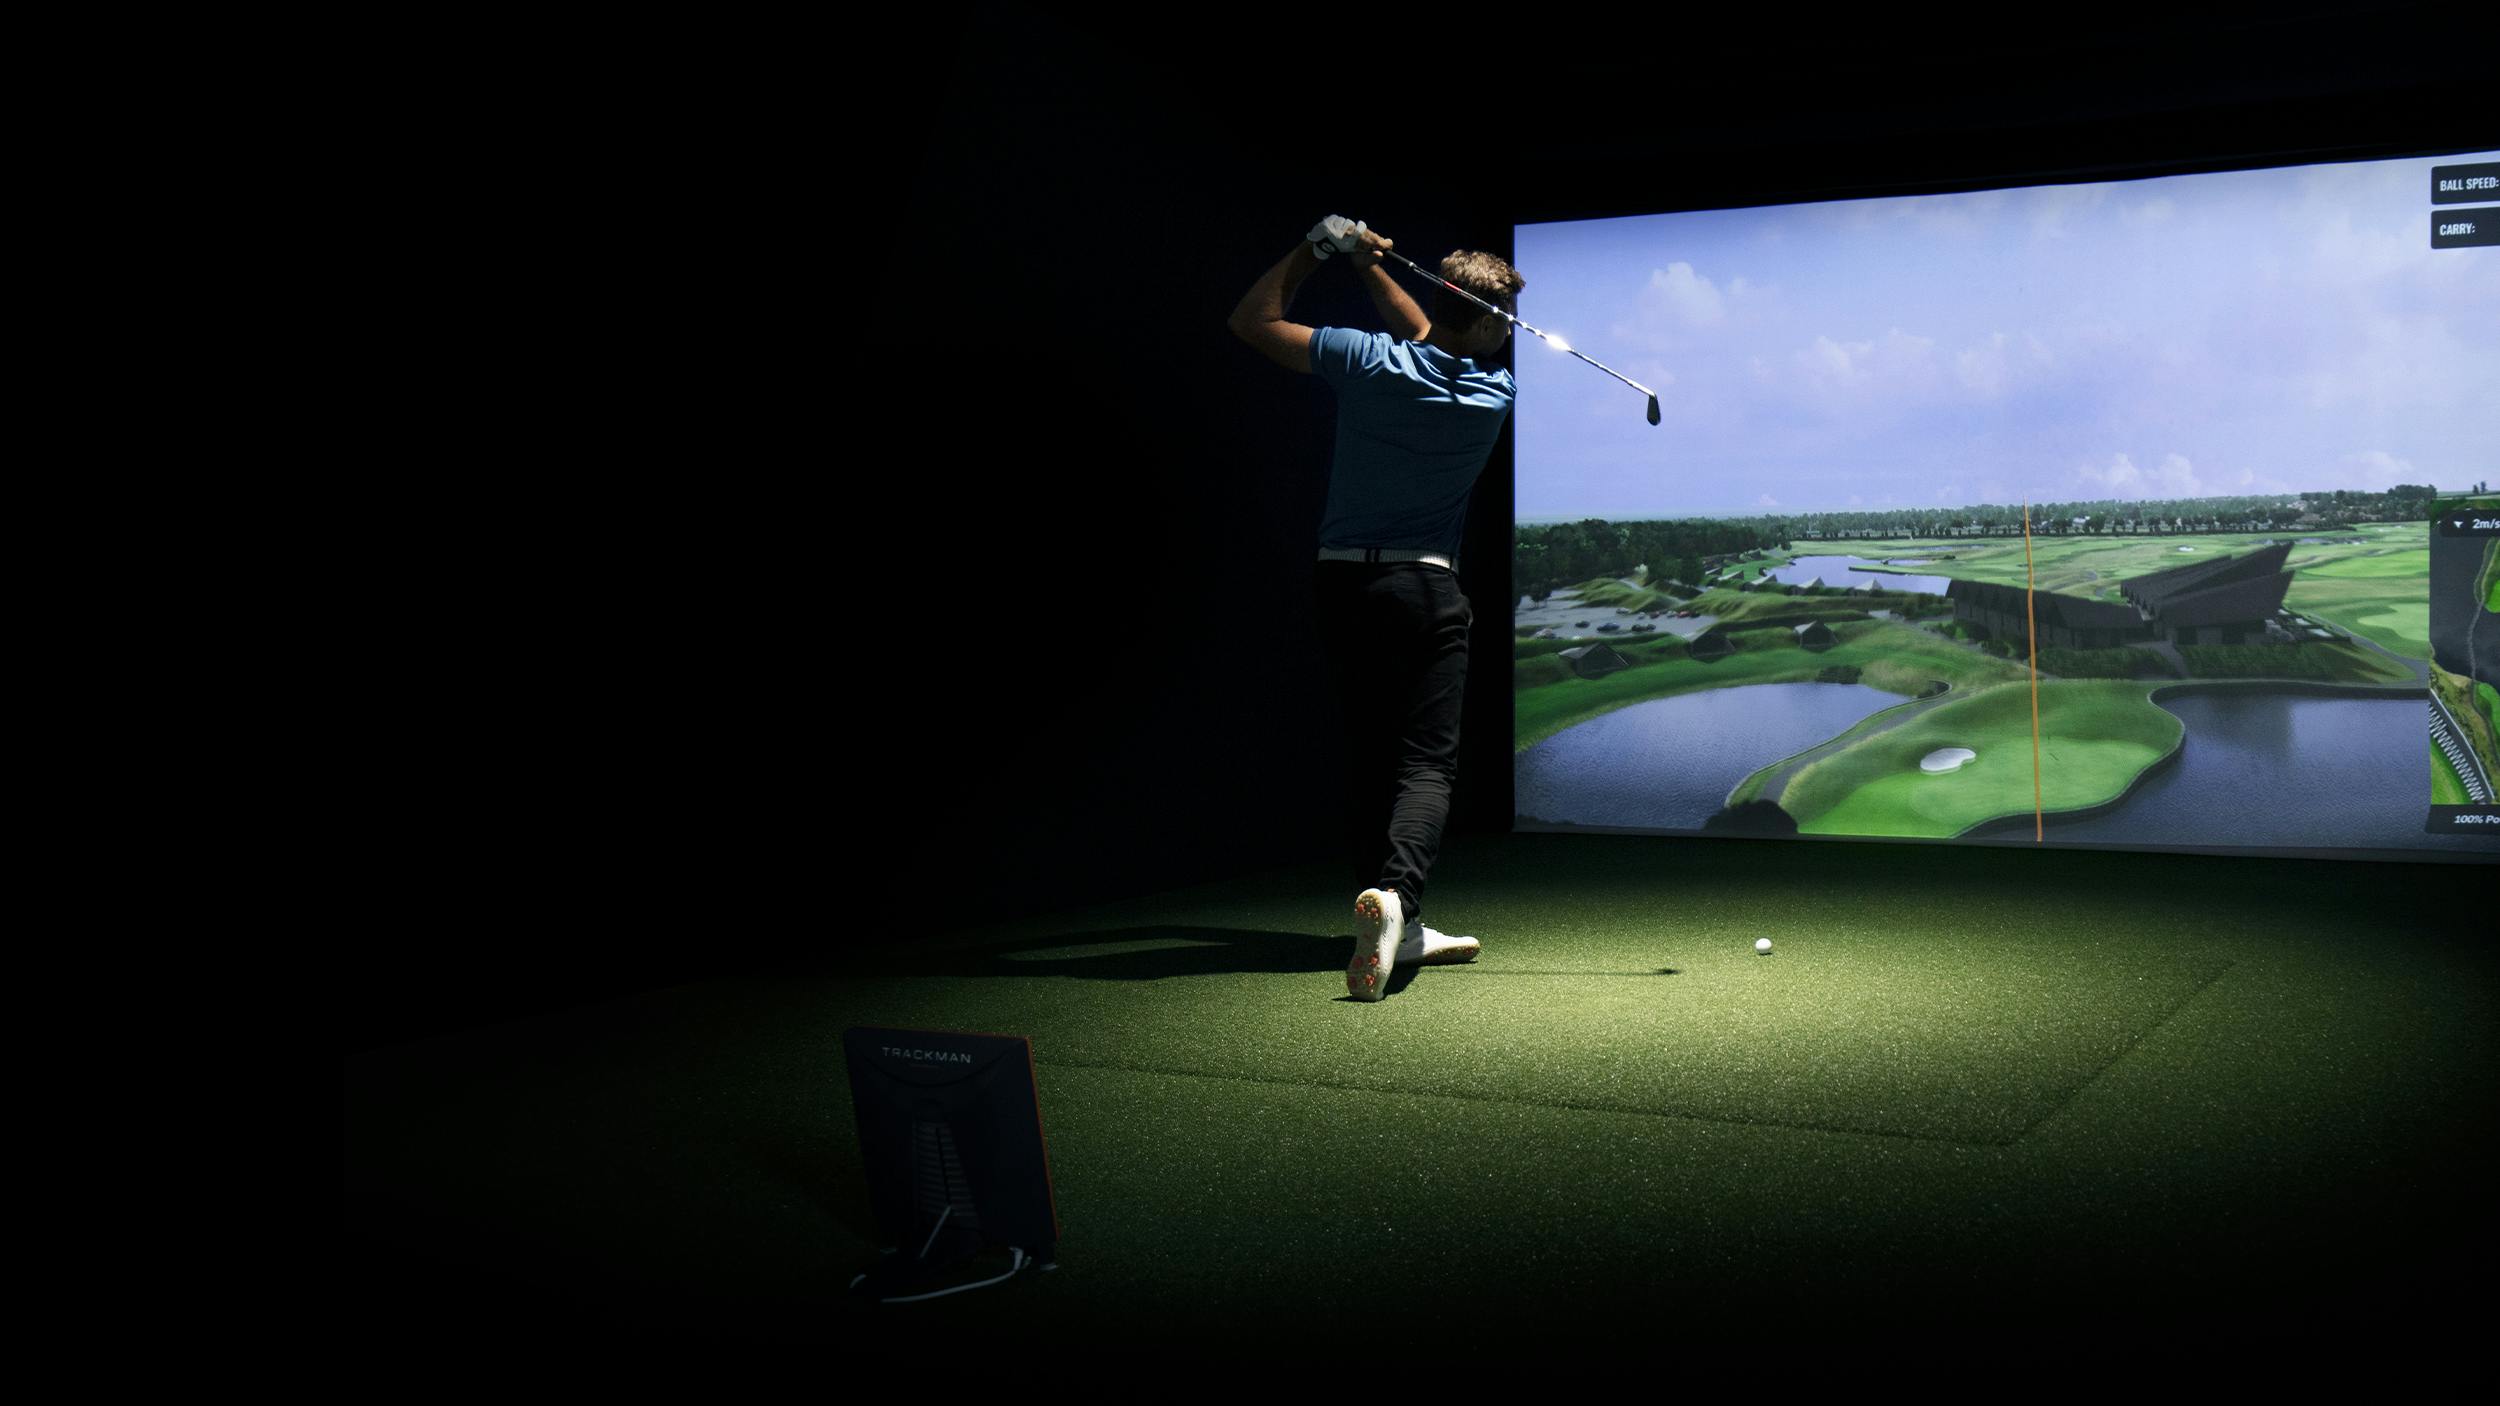 TrackMan Golf Simulator